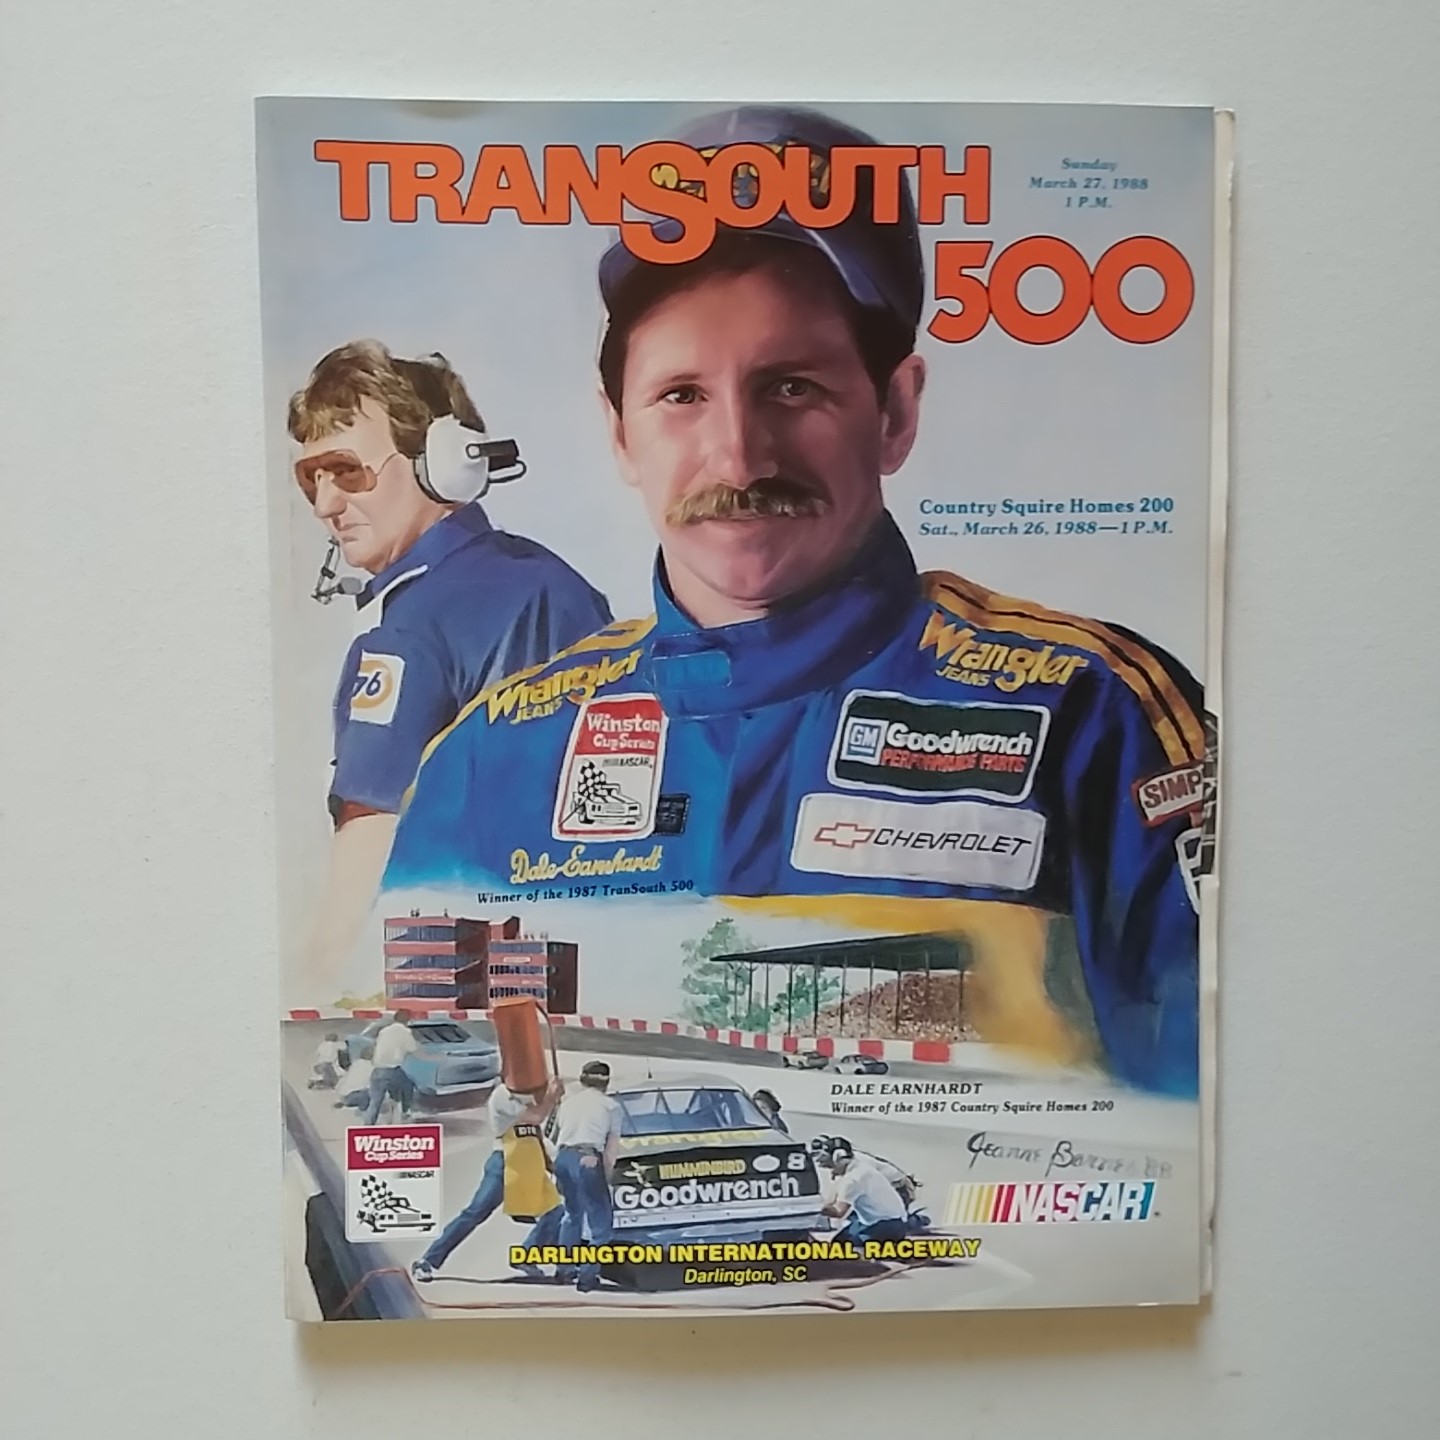 1988 Darlington Transsouth 500 March Program